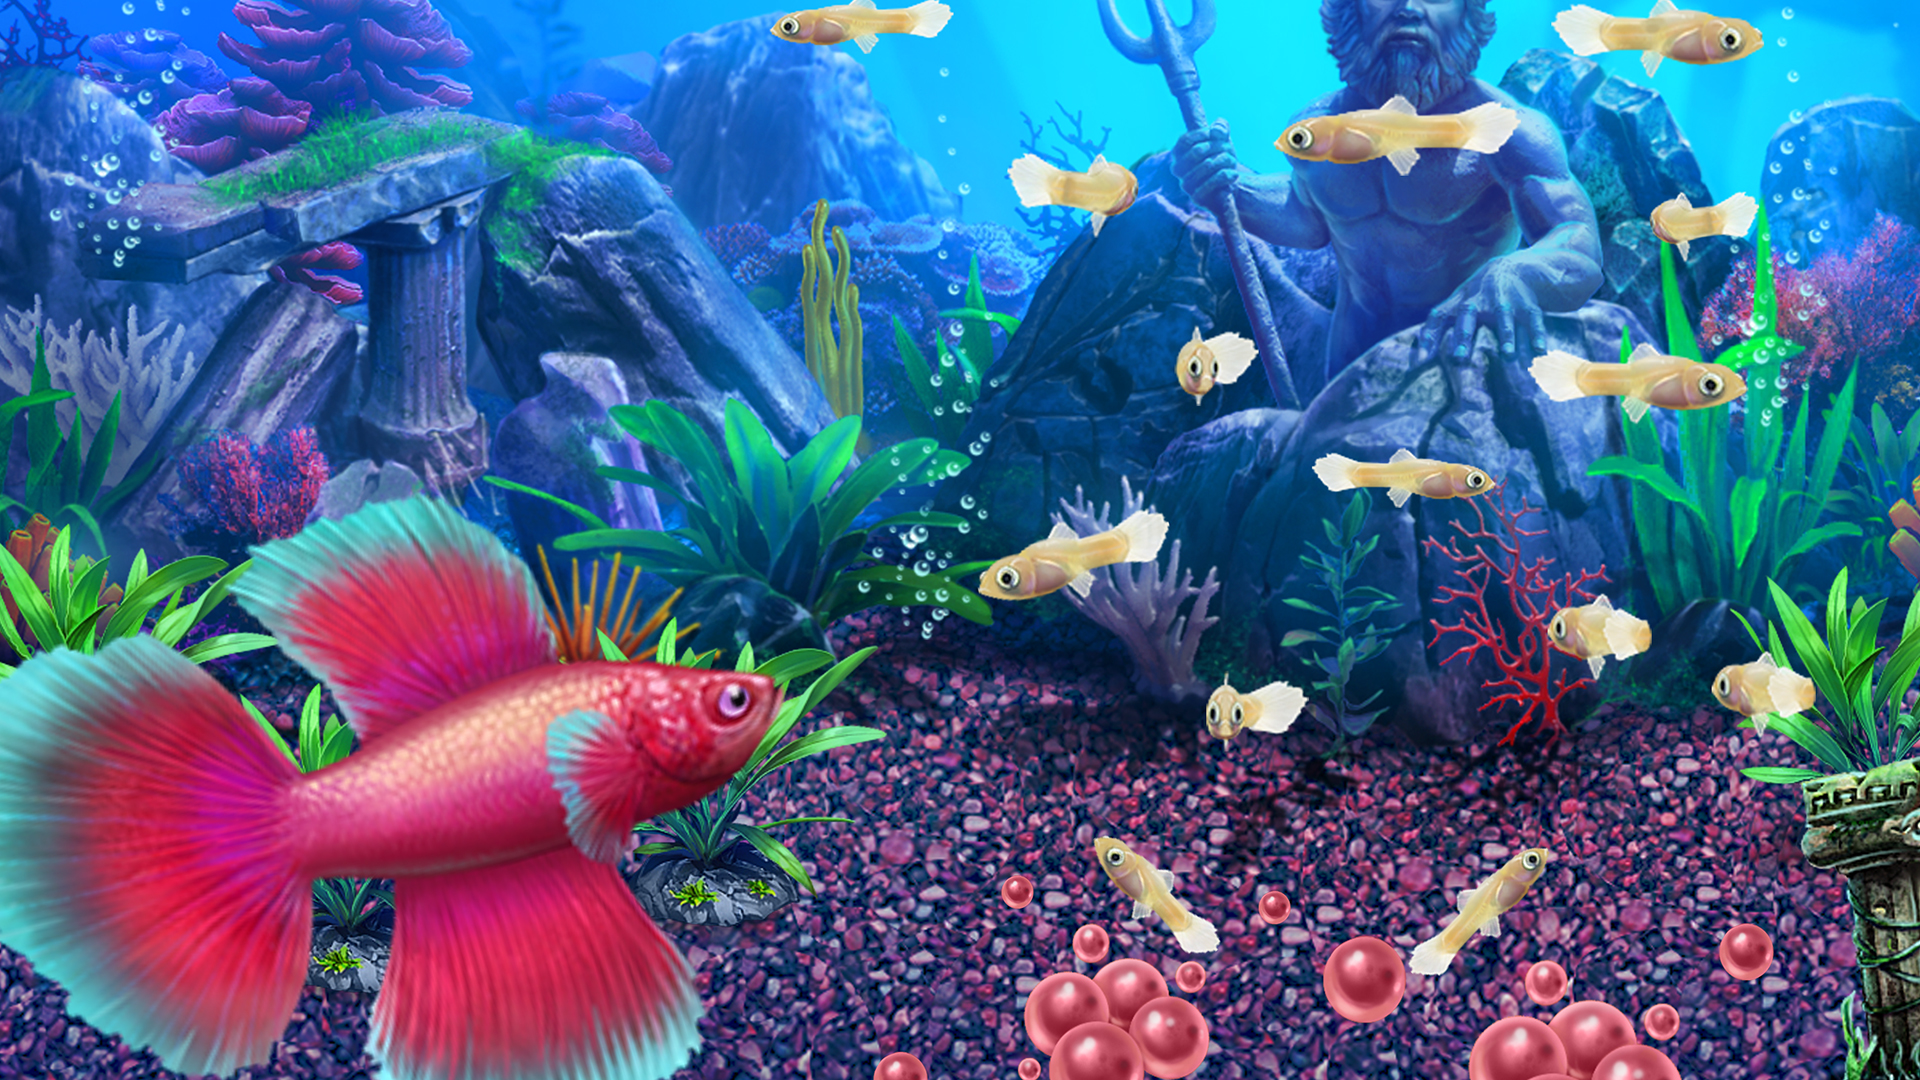 fish tycoon 2 virtual aquarium